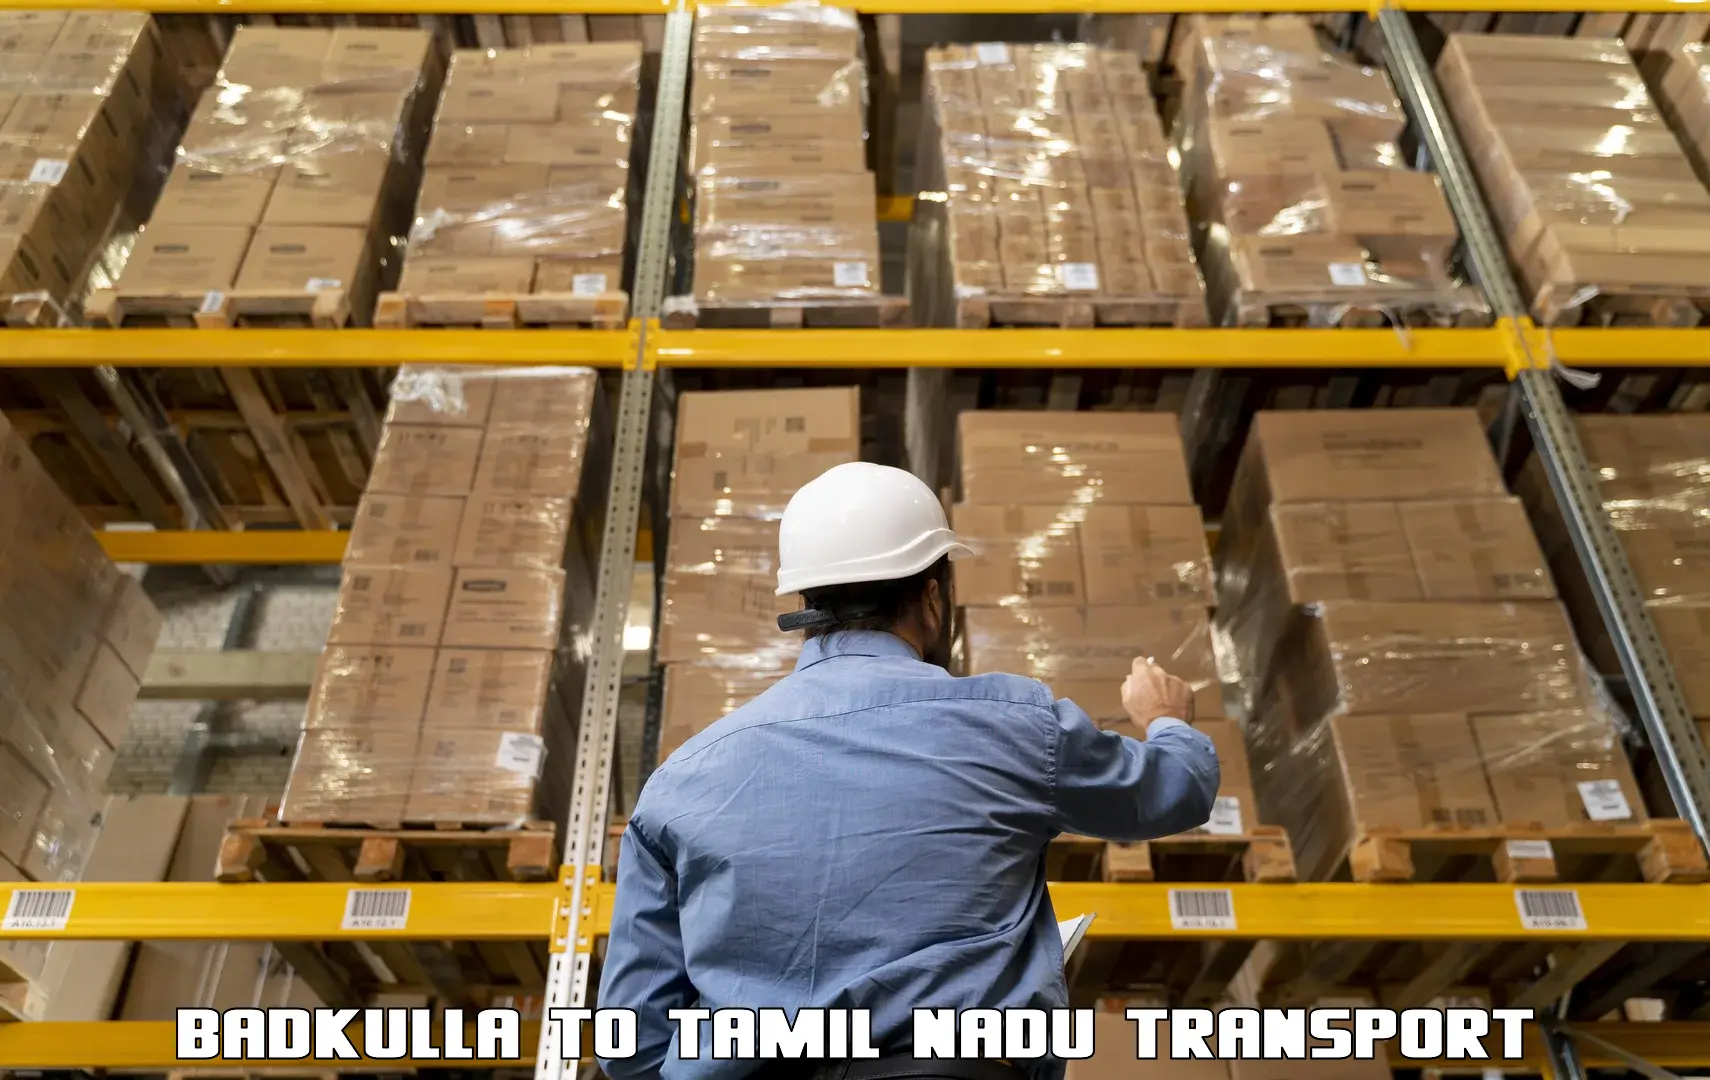 Truck transport companies in India Badkulla to Ennore Port Chennai